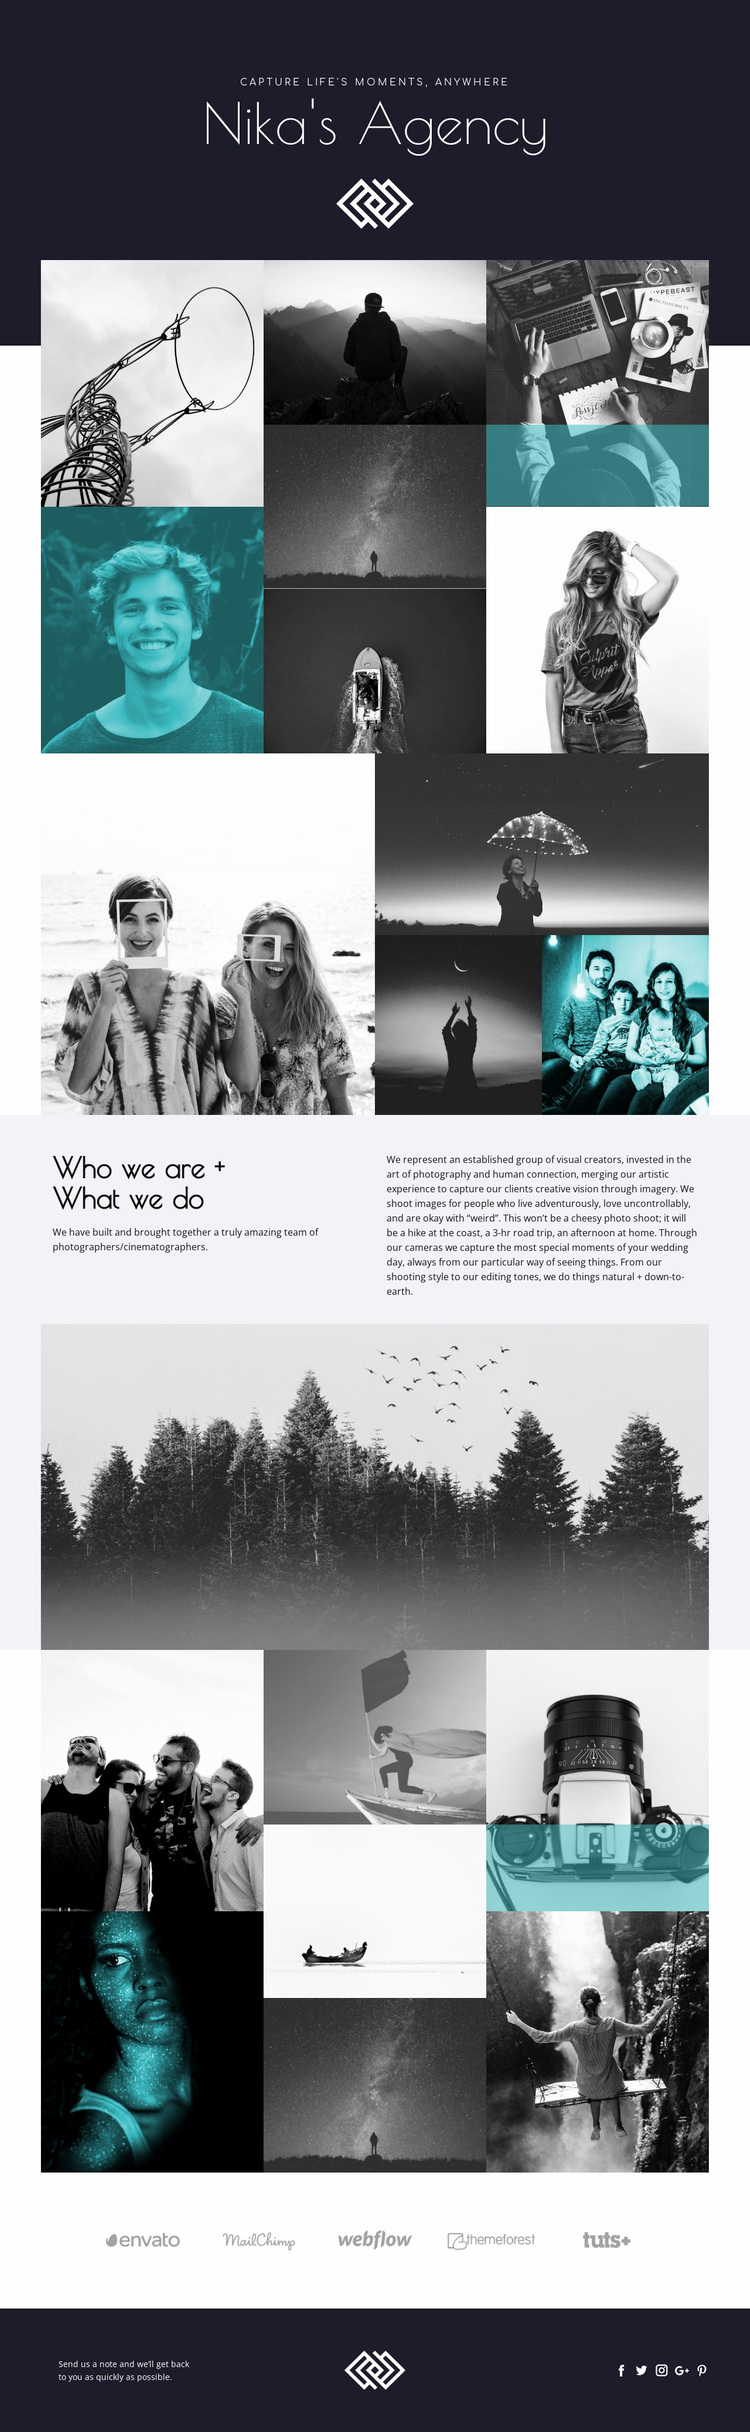 Nika's Agency Website Design